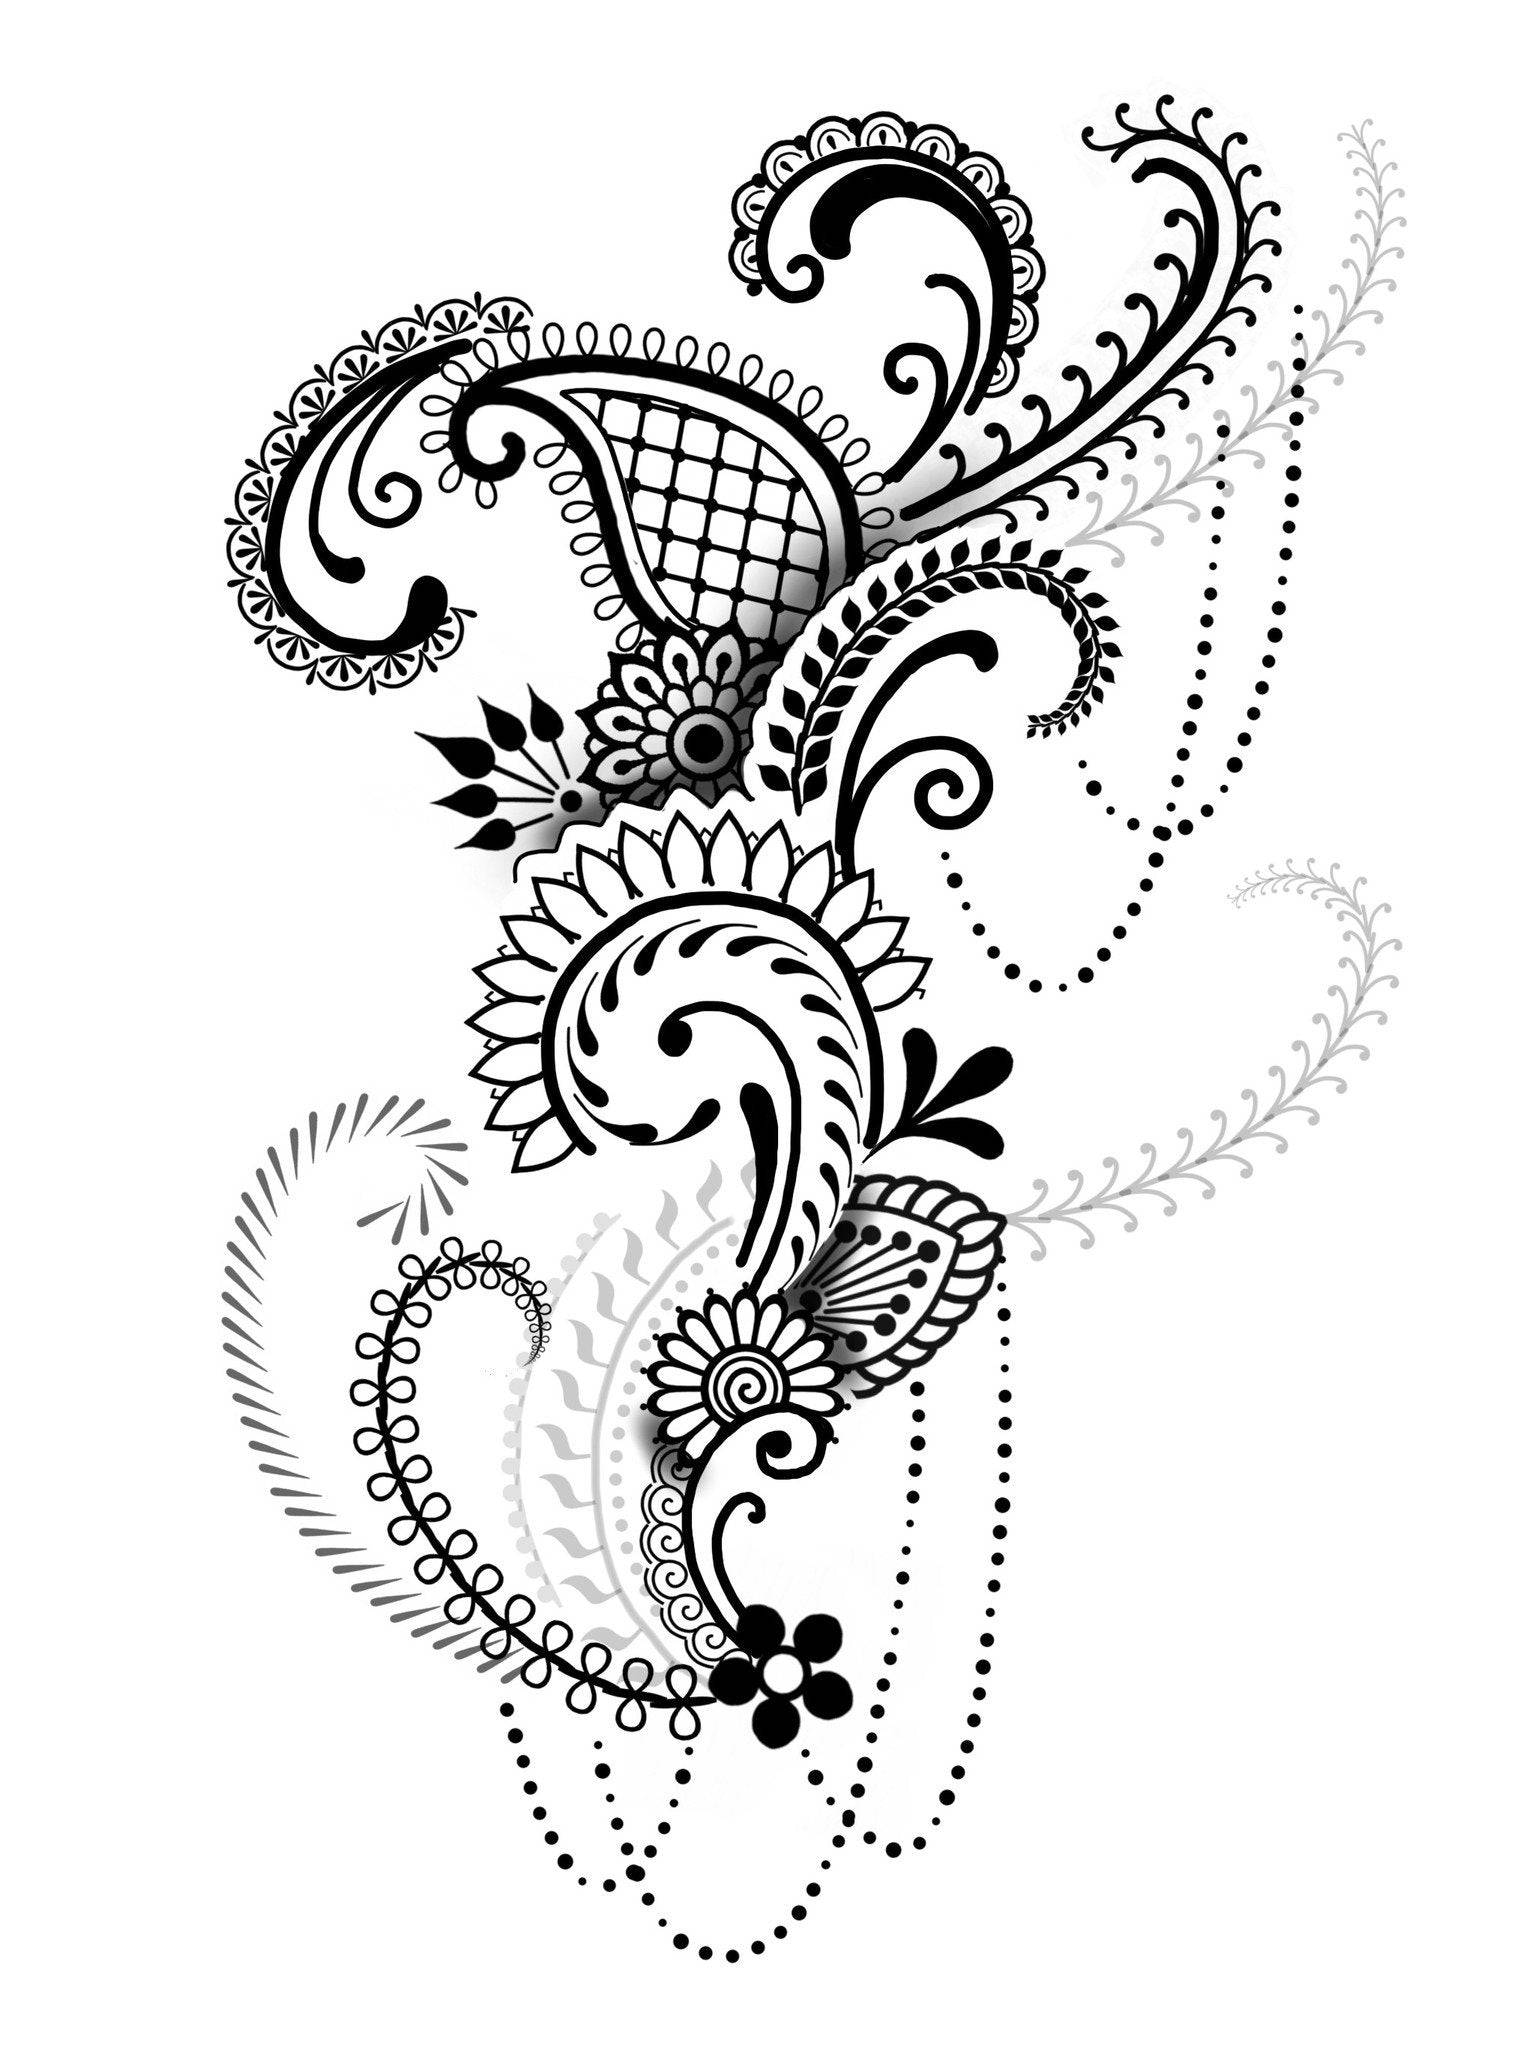 Master the Art of Henna Mehndi Design by Dr. Ifrah Jabbar | Udemy